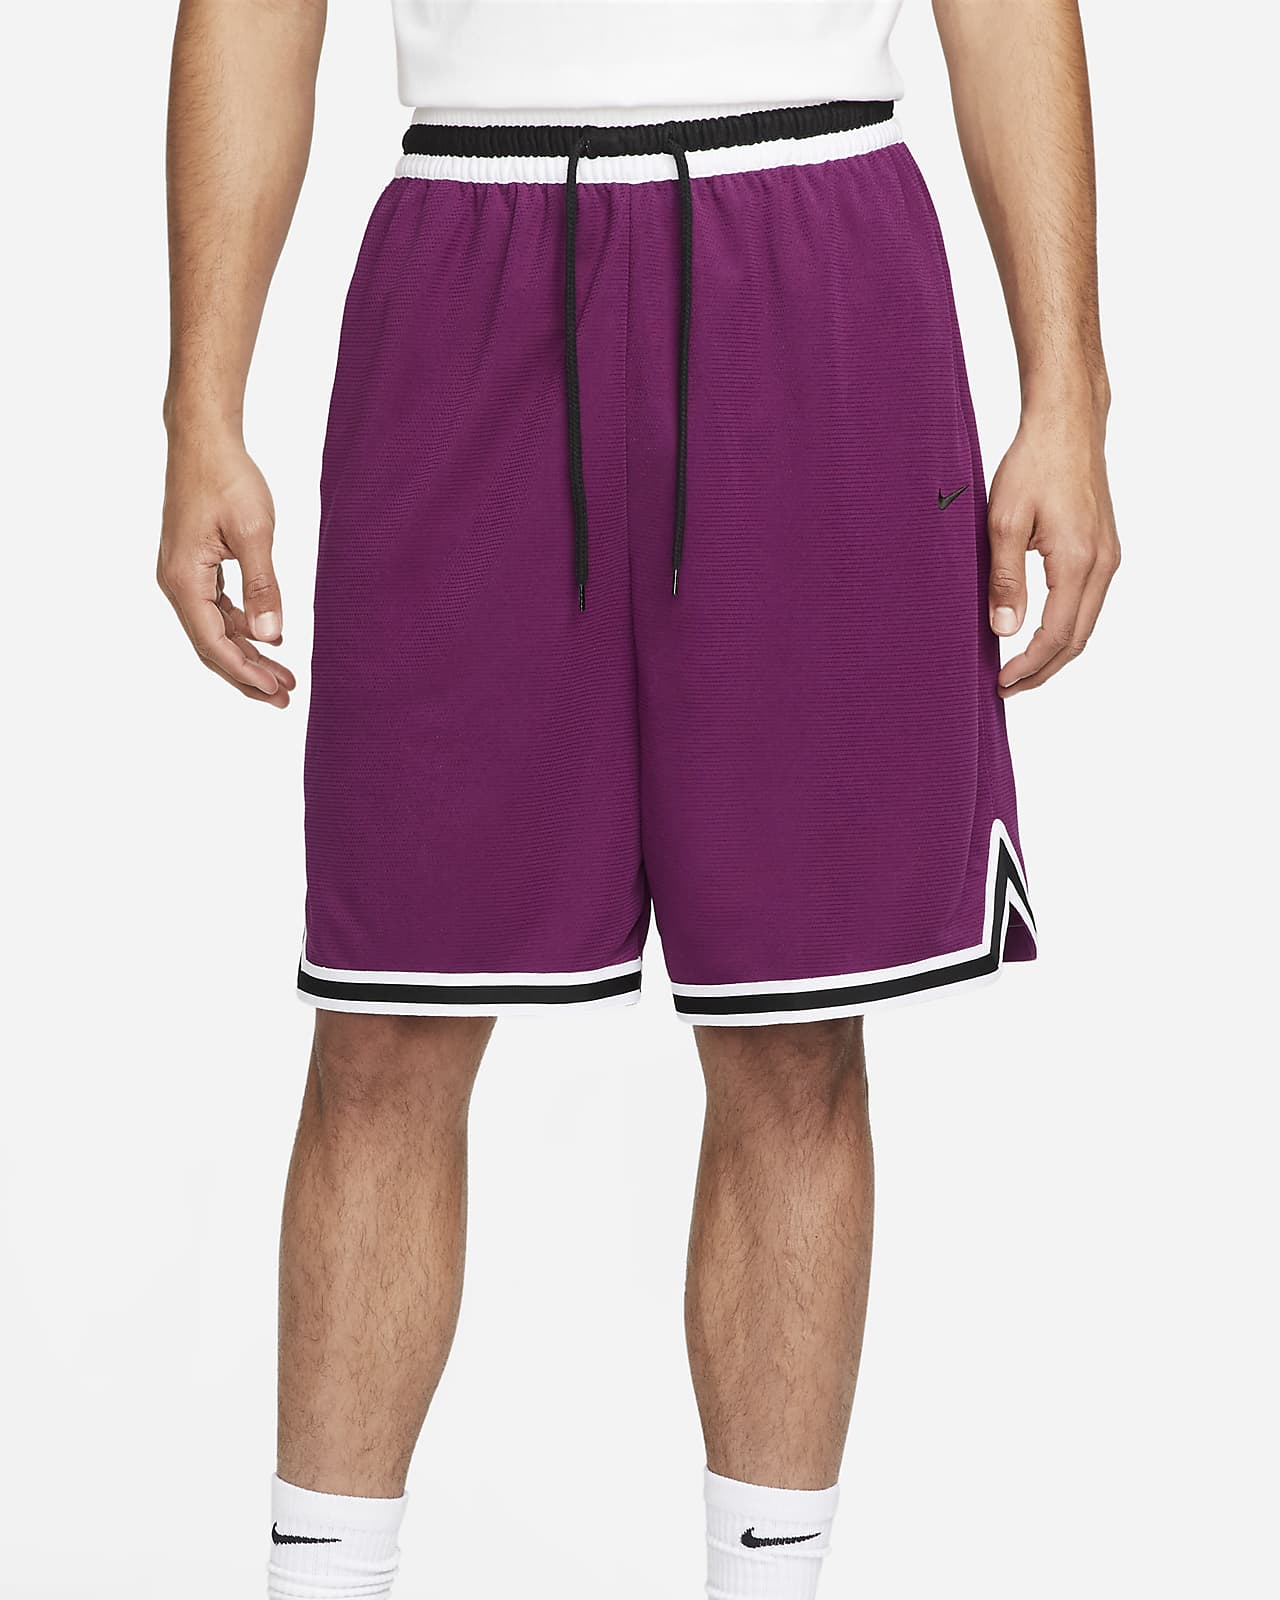 Purple Brand Monogram Shorts Red / XL